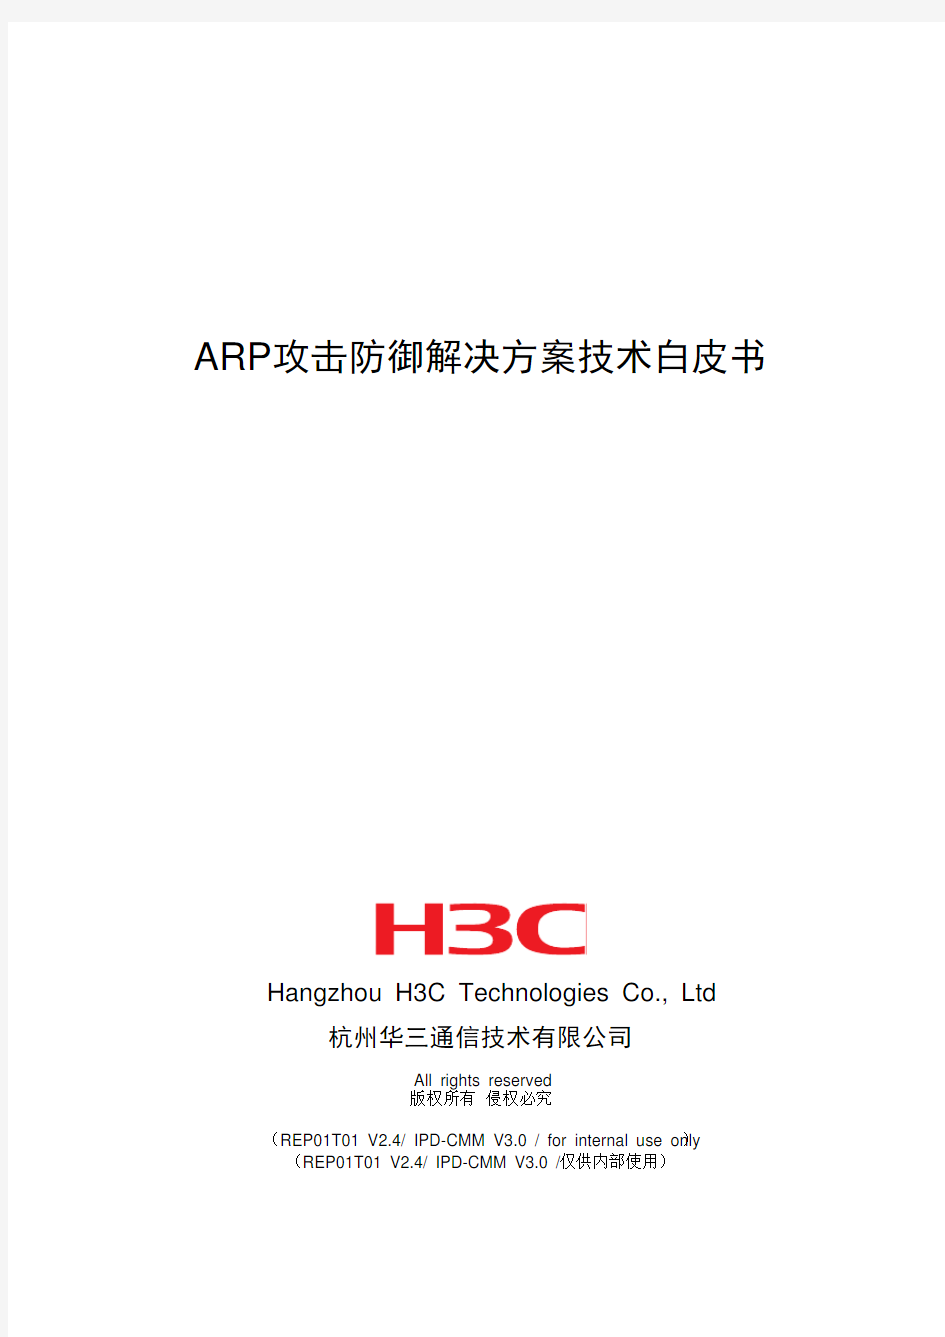 H3C内部资料：ARP攻击防御解决方案技术白皮书